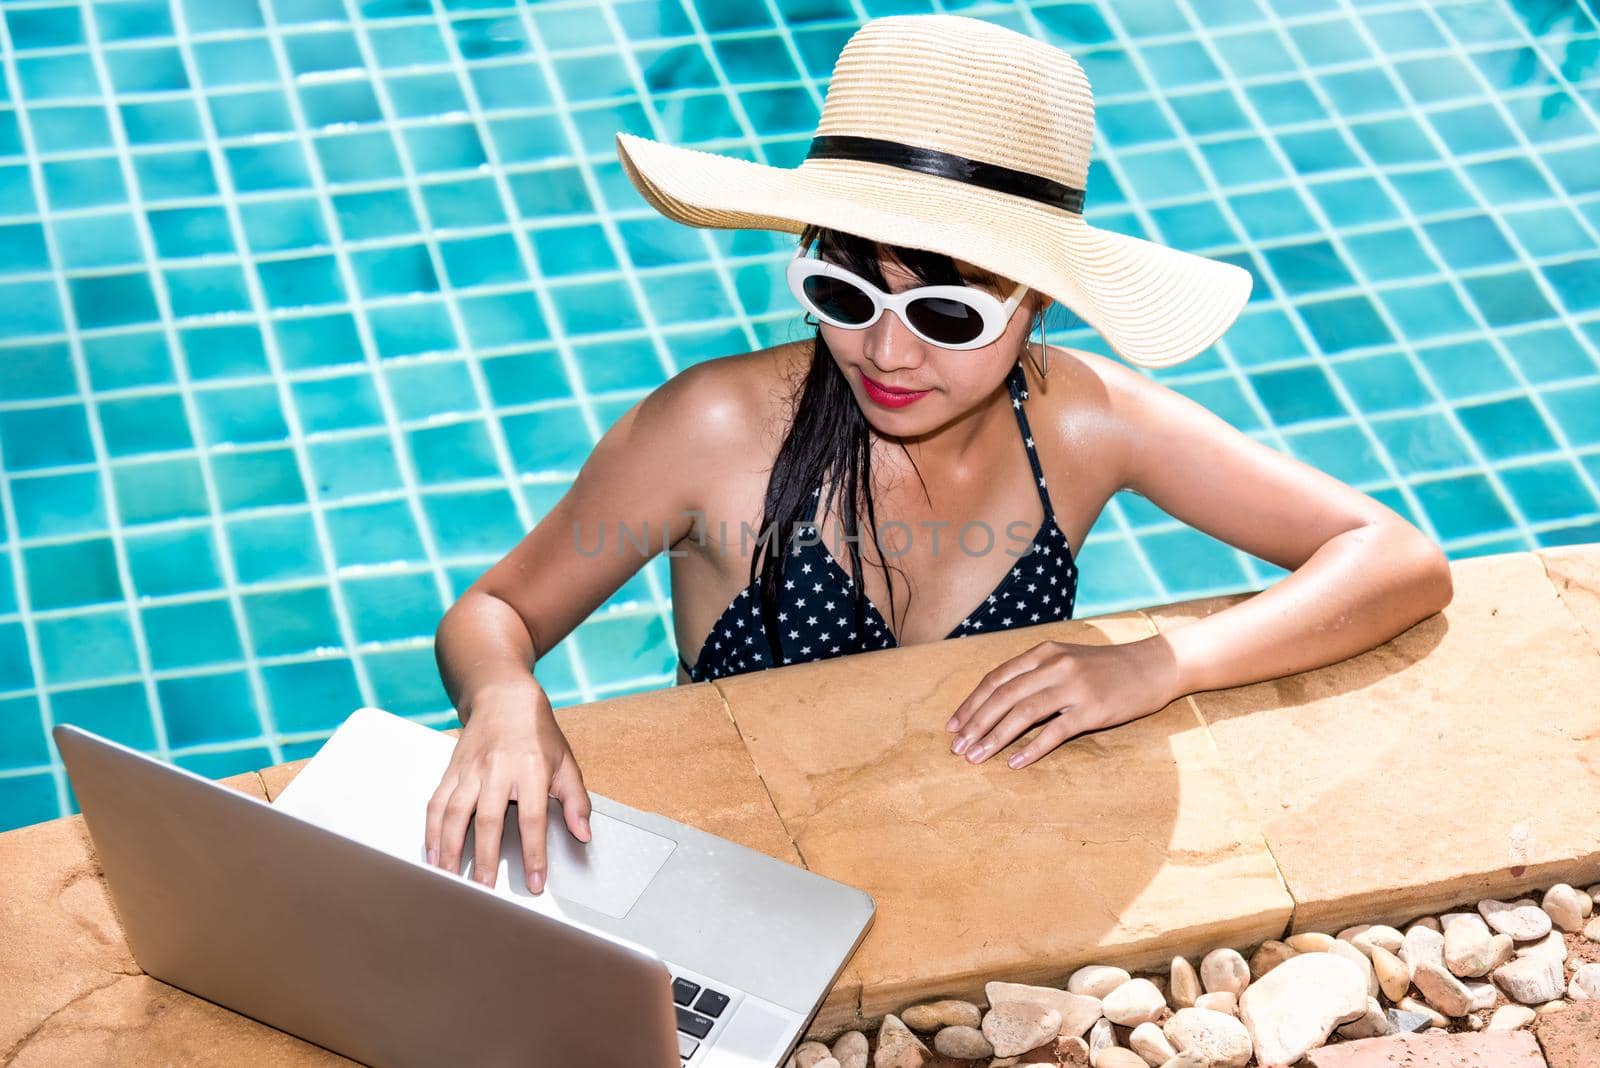 Beautiful girl woman in bikini relaxing pool and using laptop on edge while smiling by Sorapop